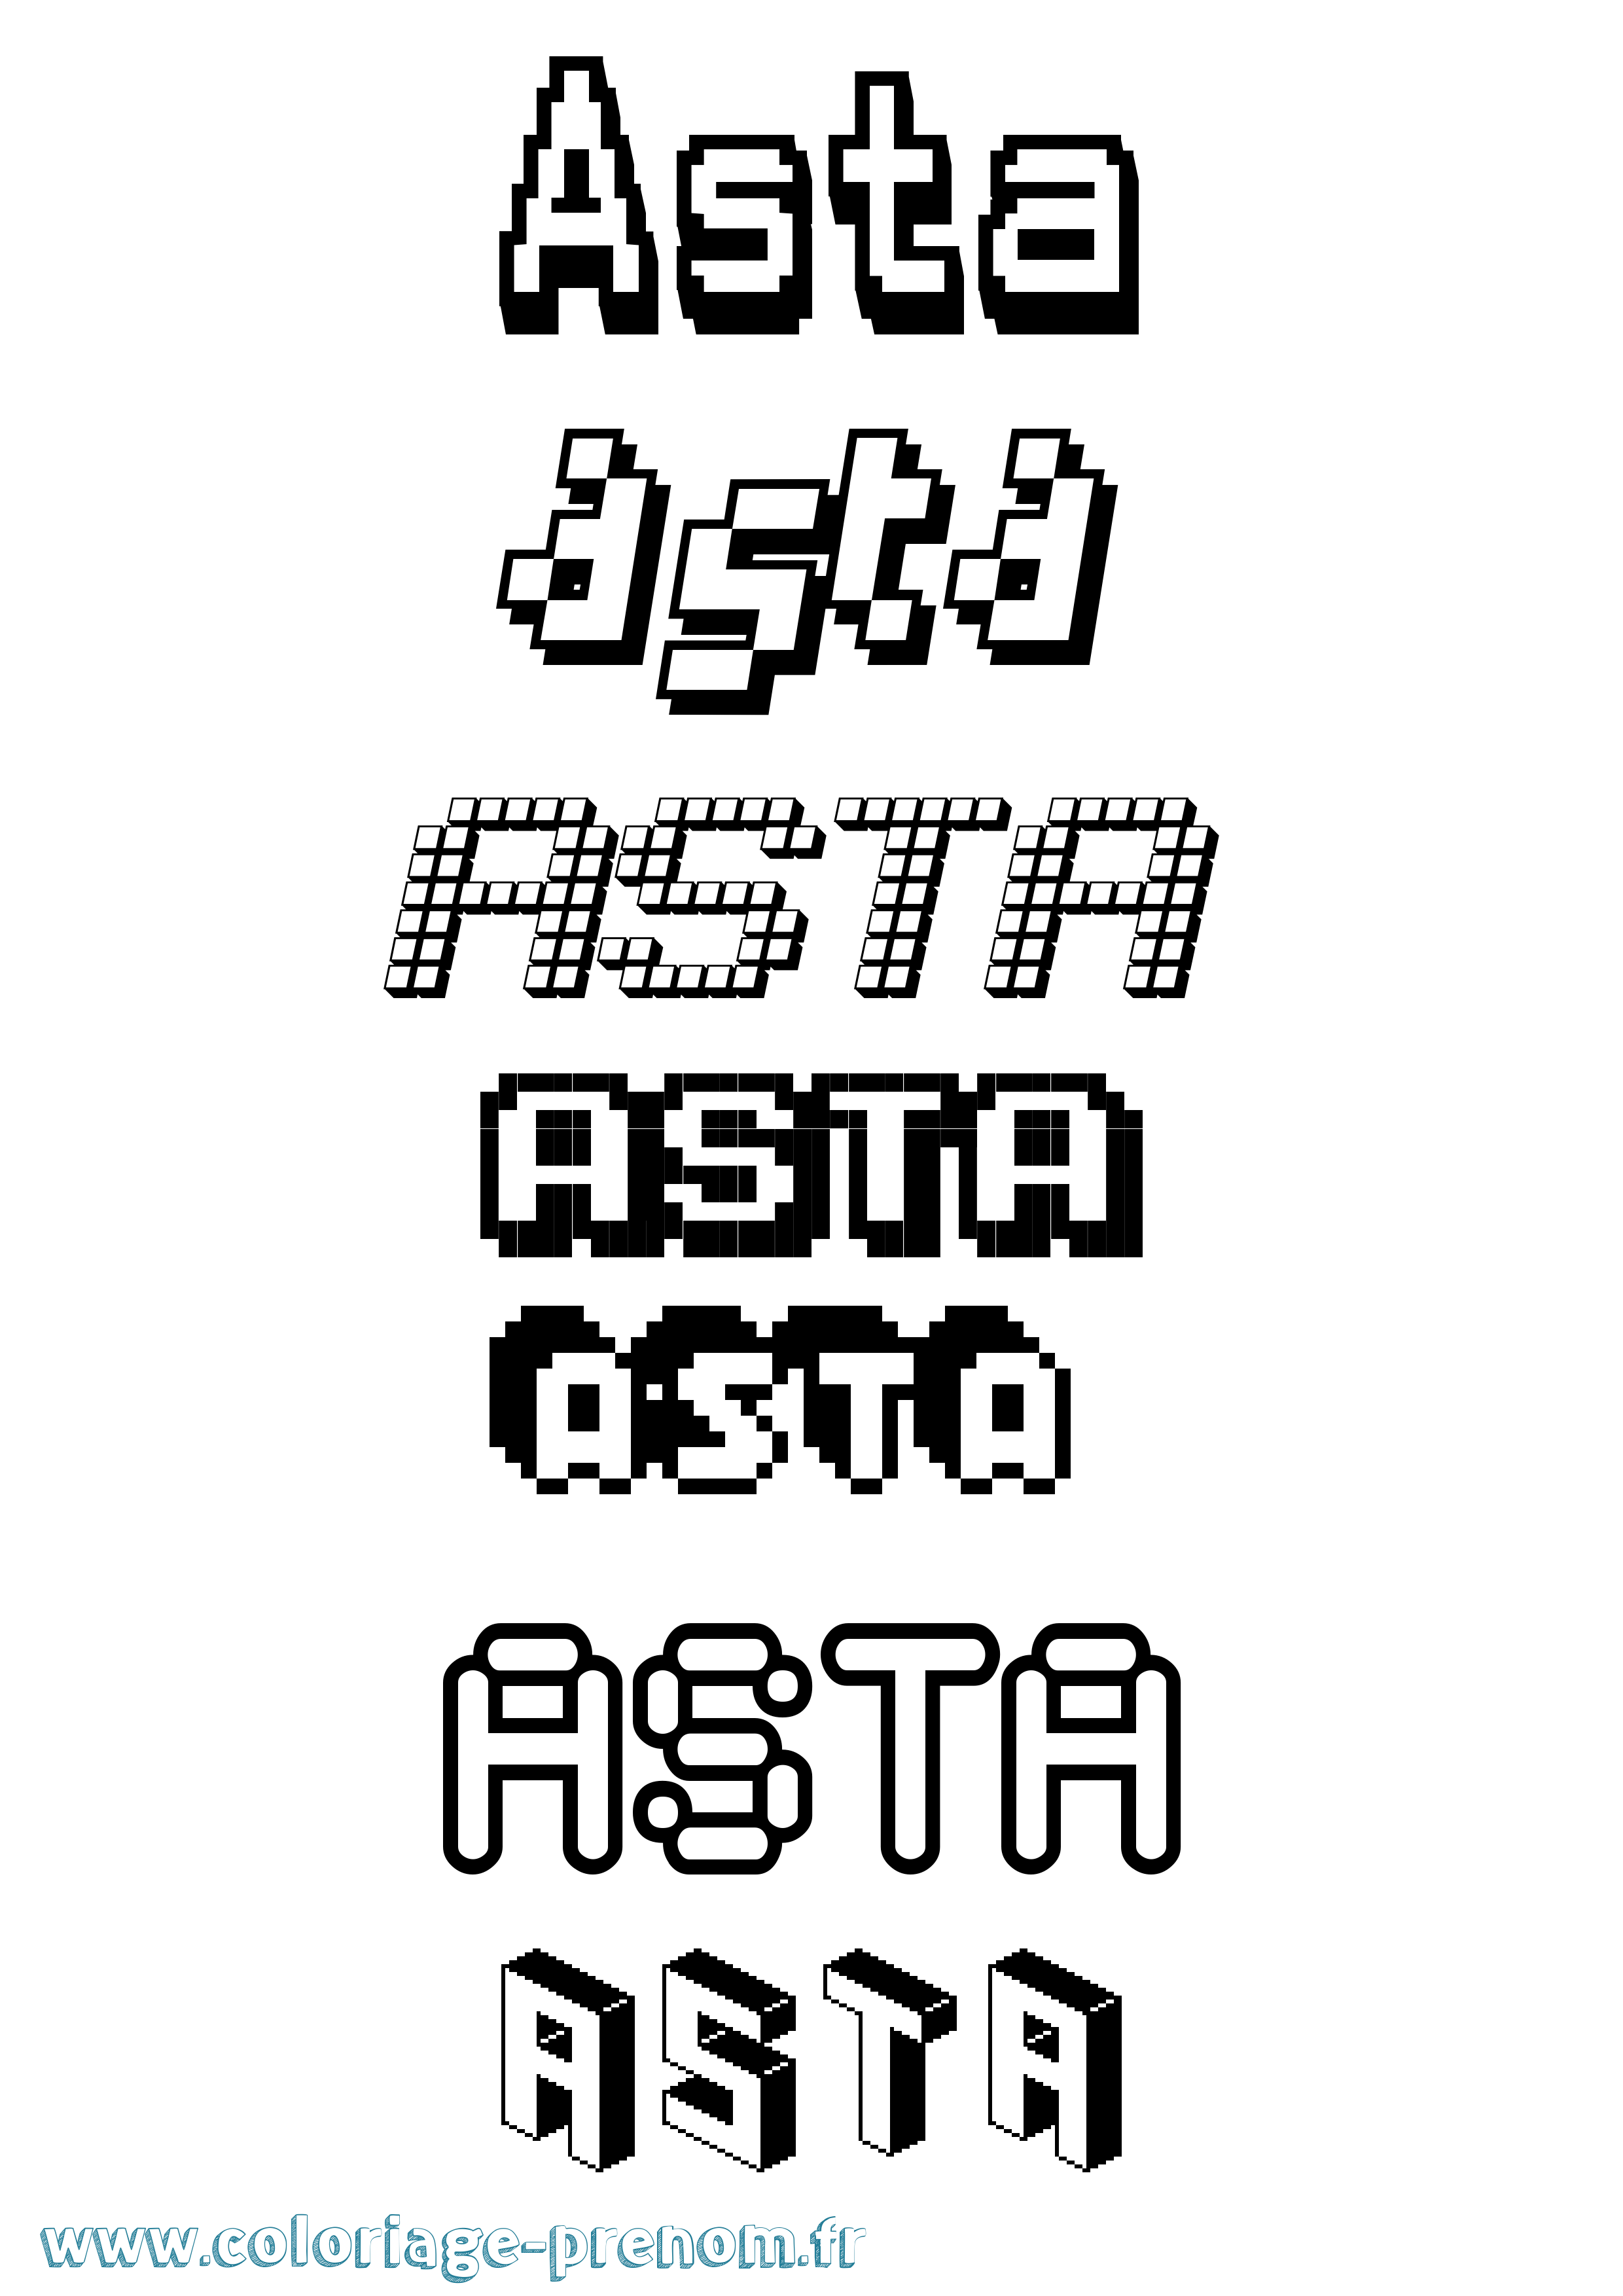 Coloriage prénom Asta Pixel